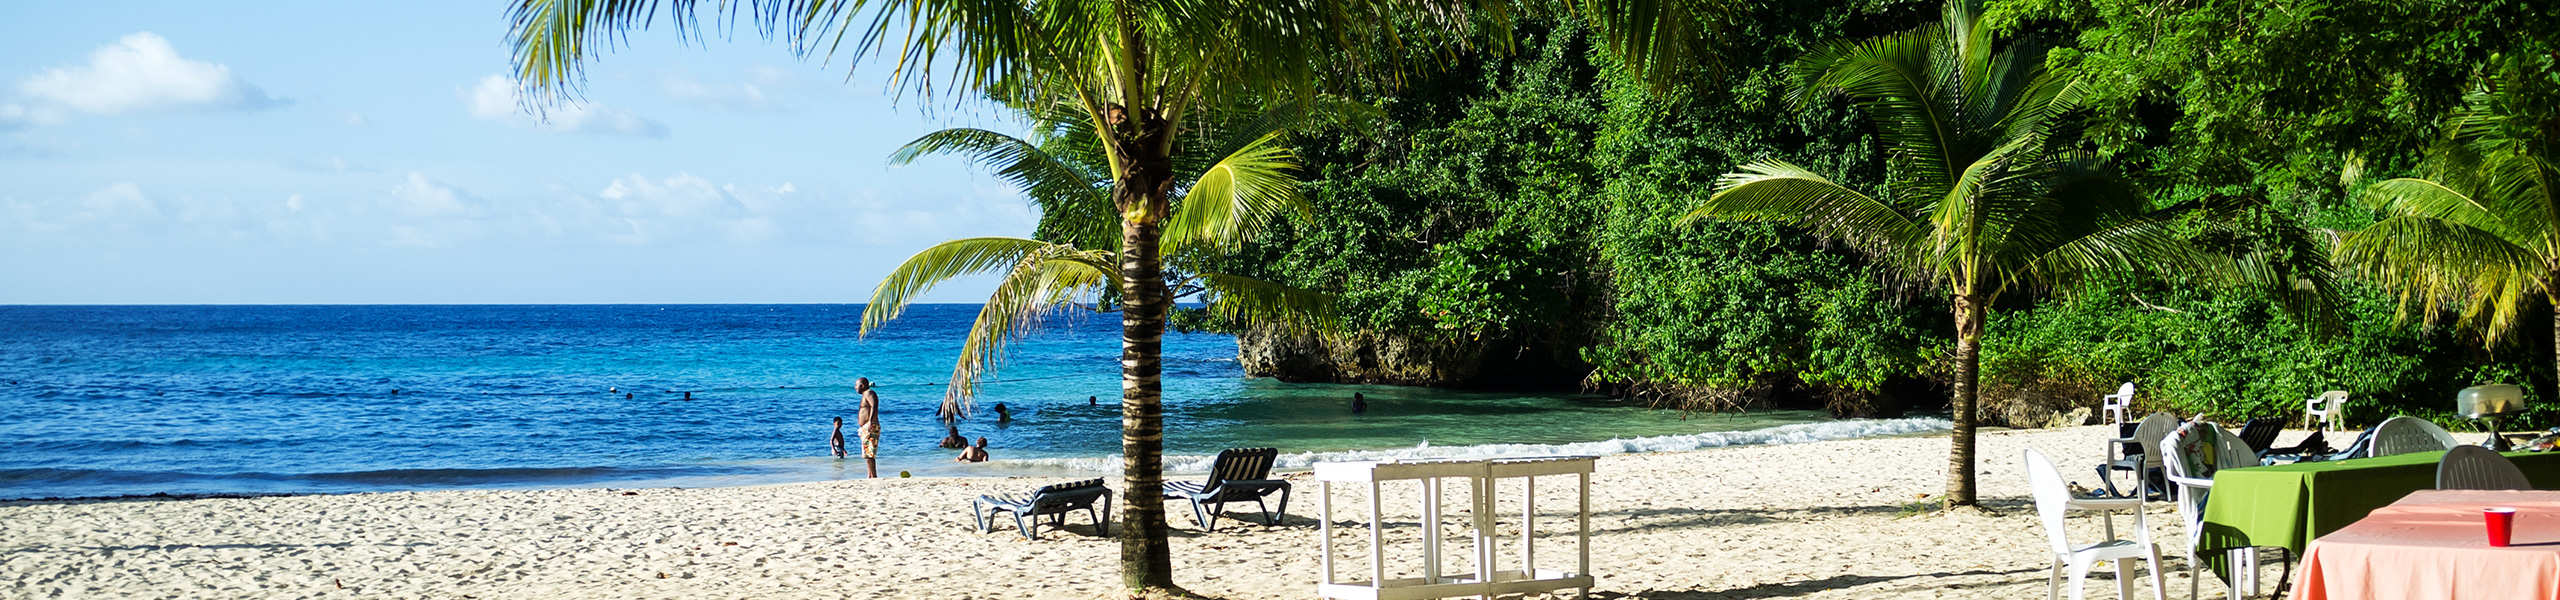 BestTours Jamaica - Port Antonio & Frenchman’s Cove & Blue Lagoon